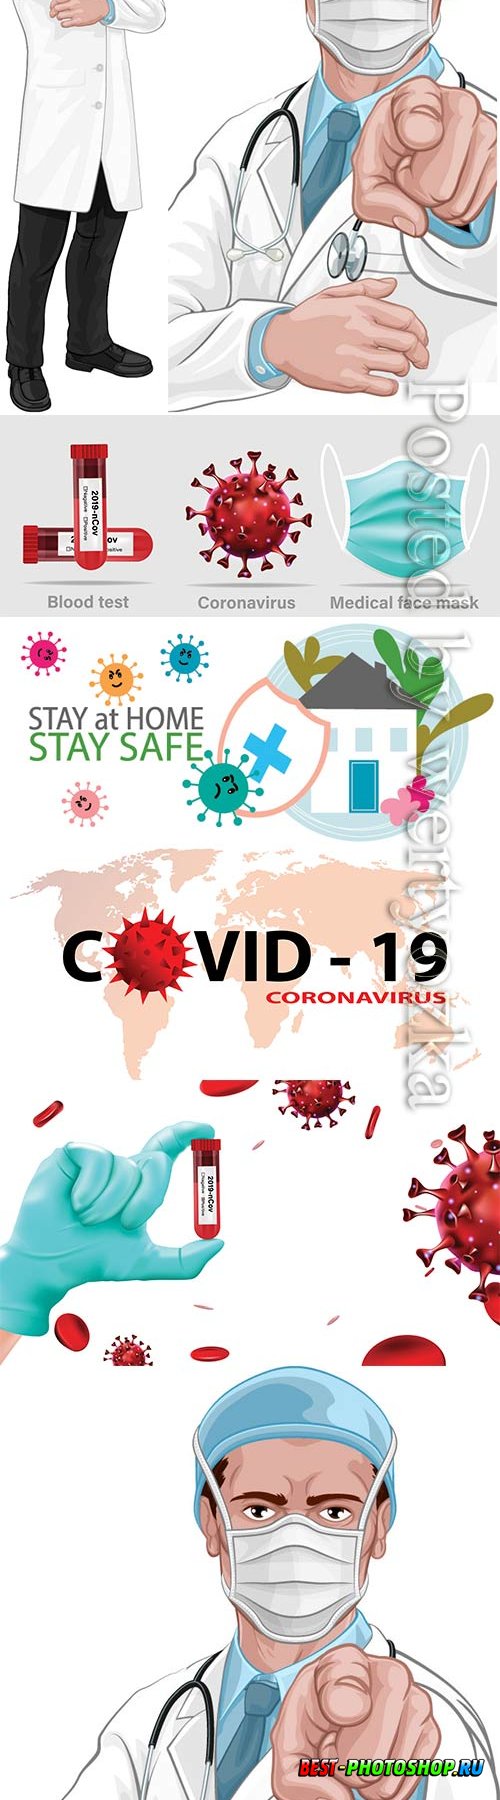 COVID 19, Coranavirus vector illustration sets # 25